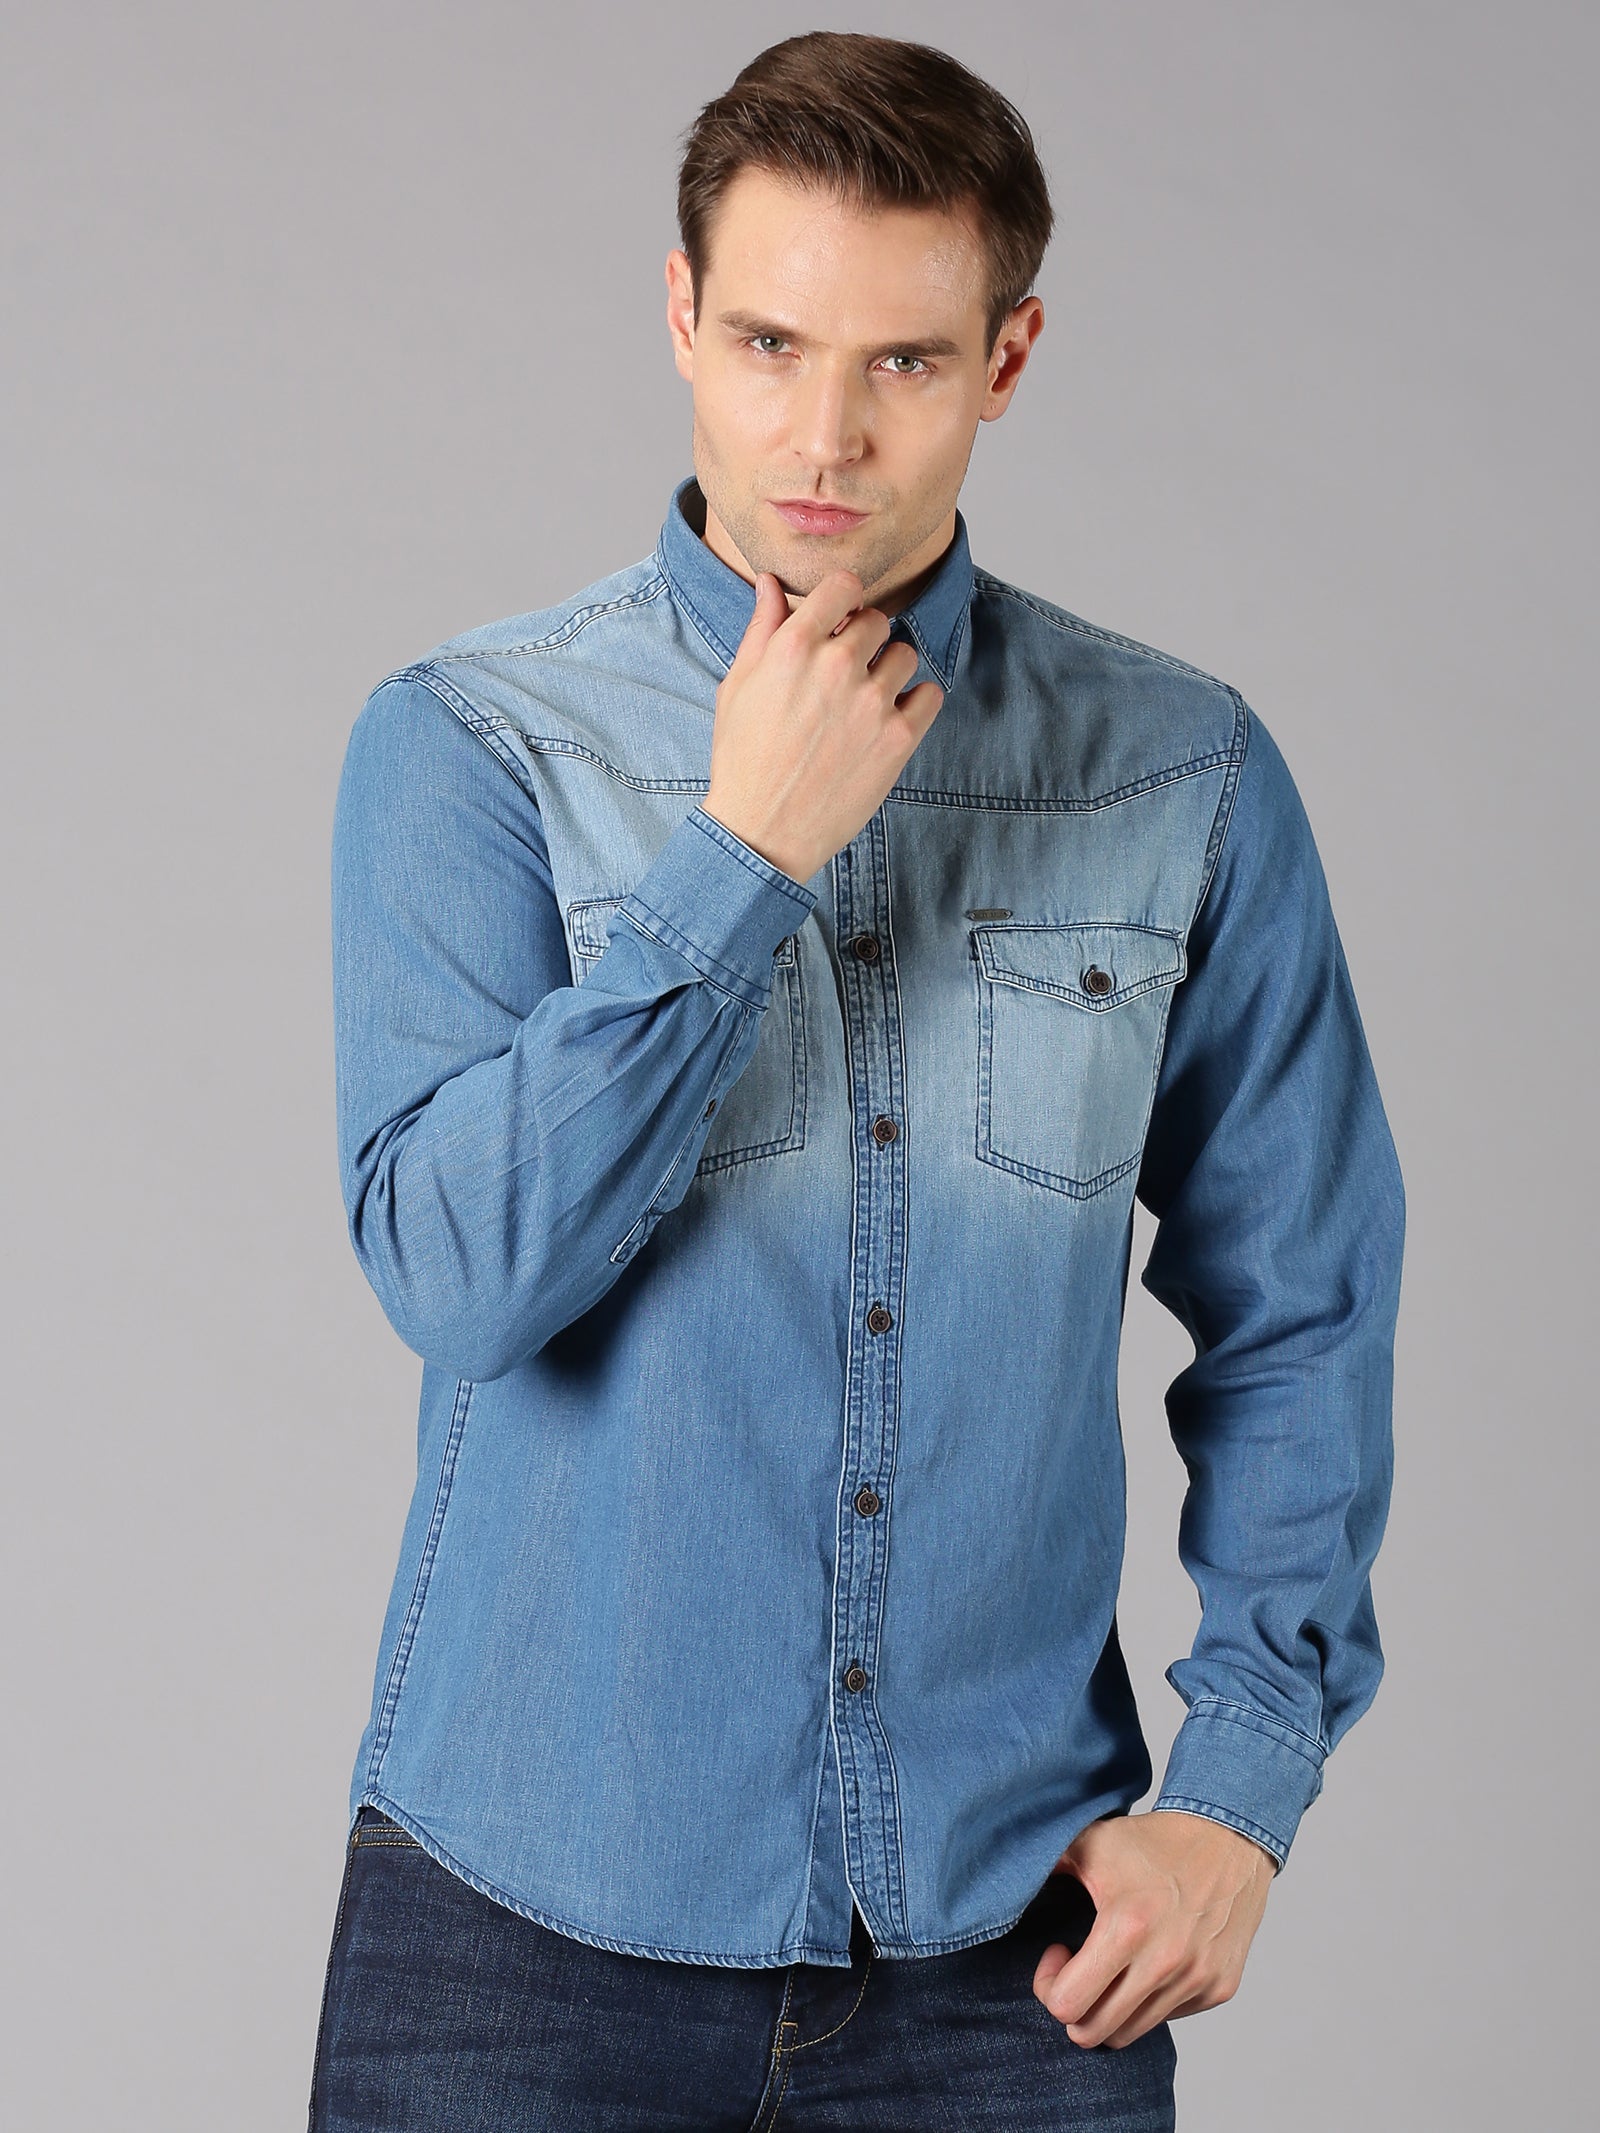 Woven Shirt in Dallas – Stitch's Jeans